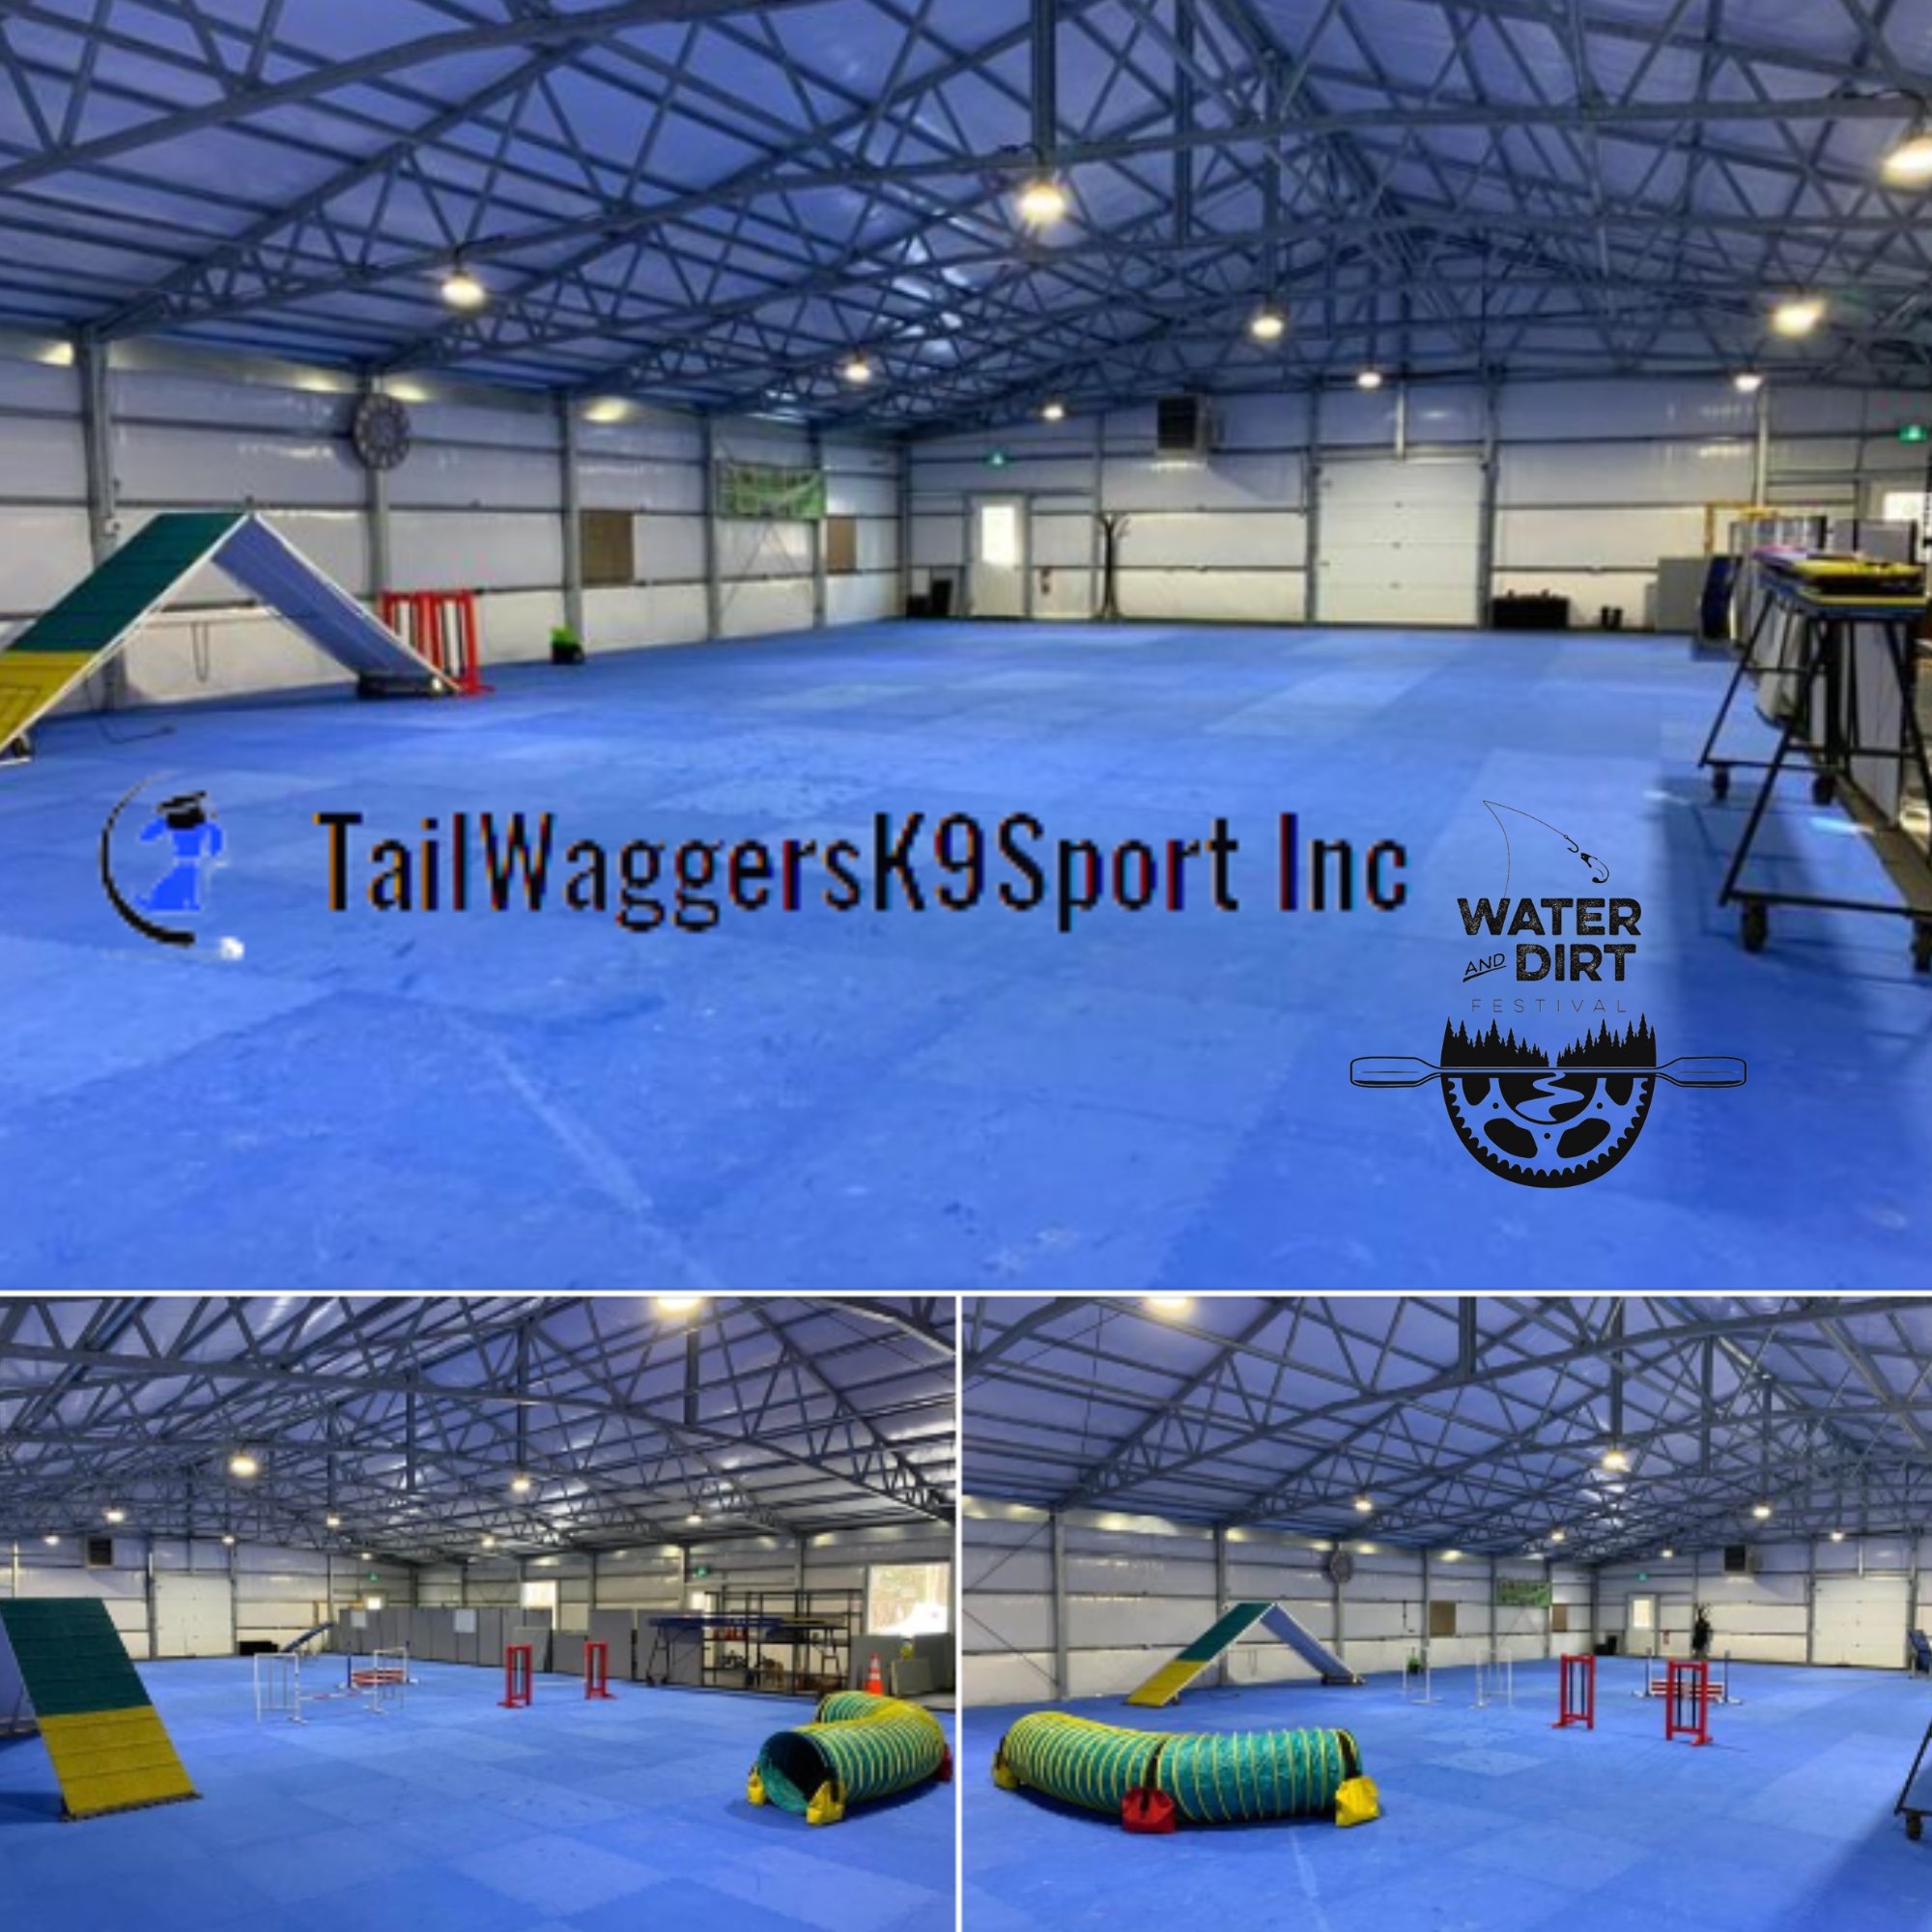 TailwaggersK9 facility image